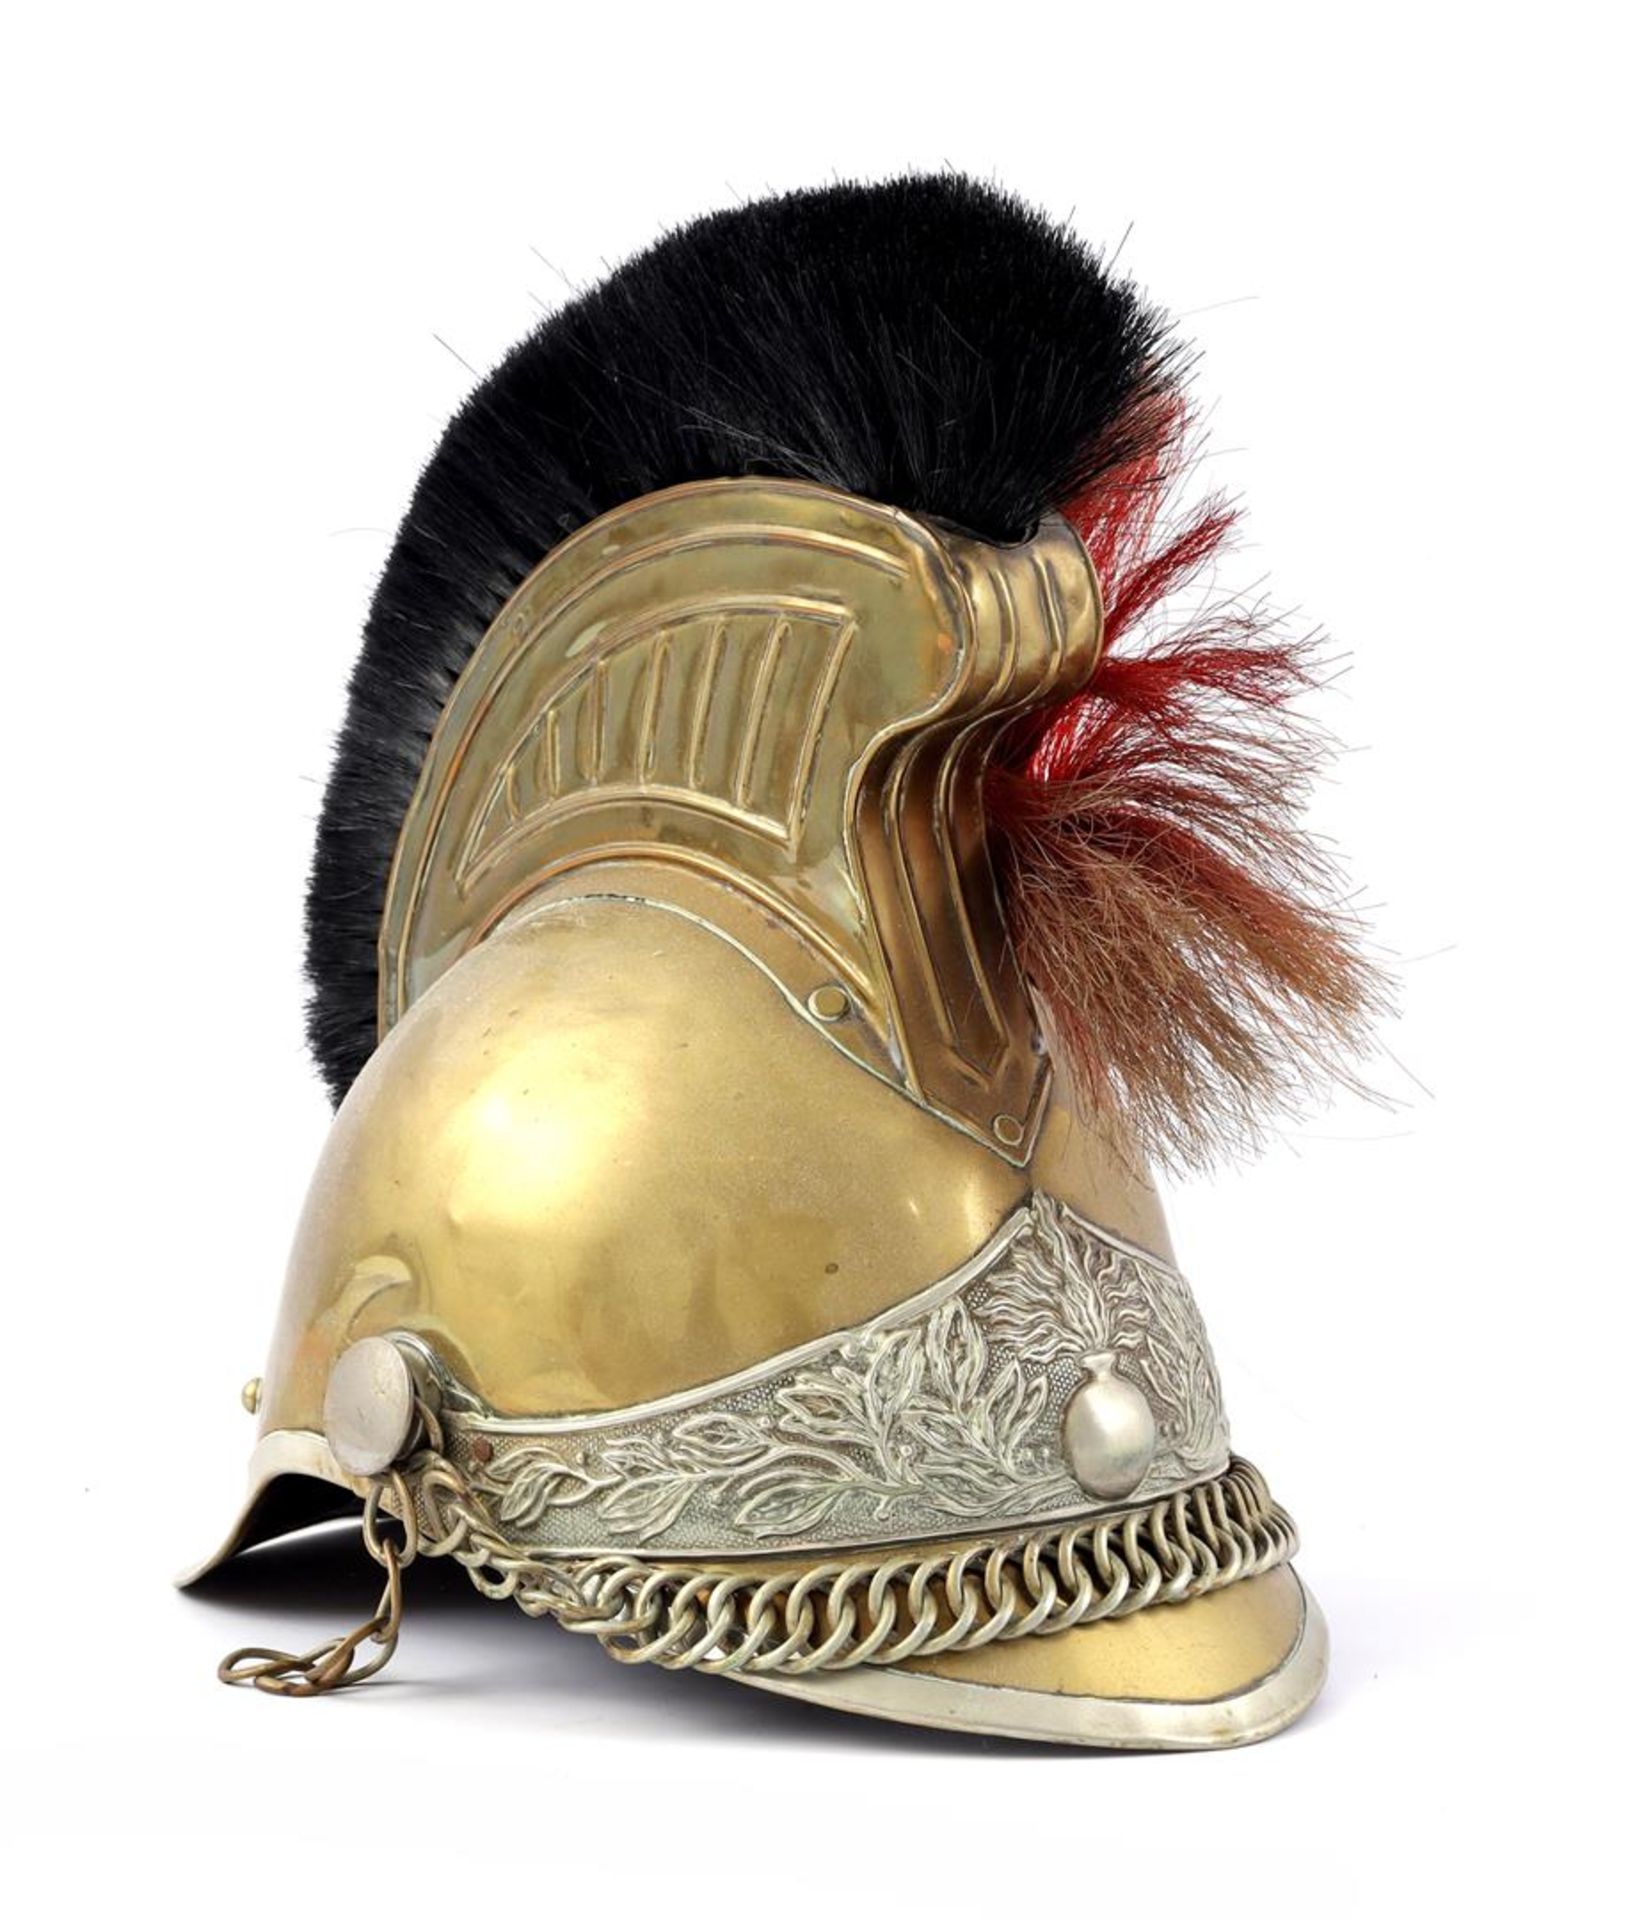 Brass 19th century military helmet, still in use byGarde Nationale Françaises